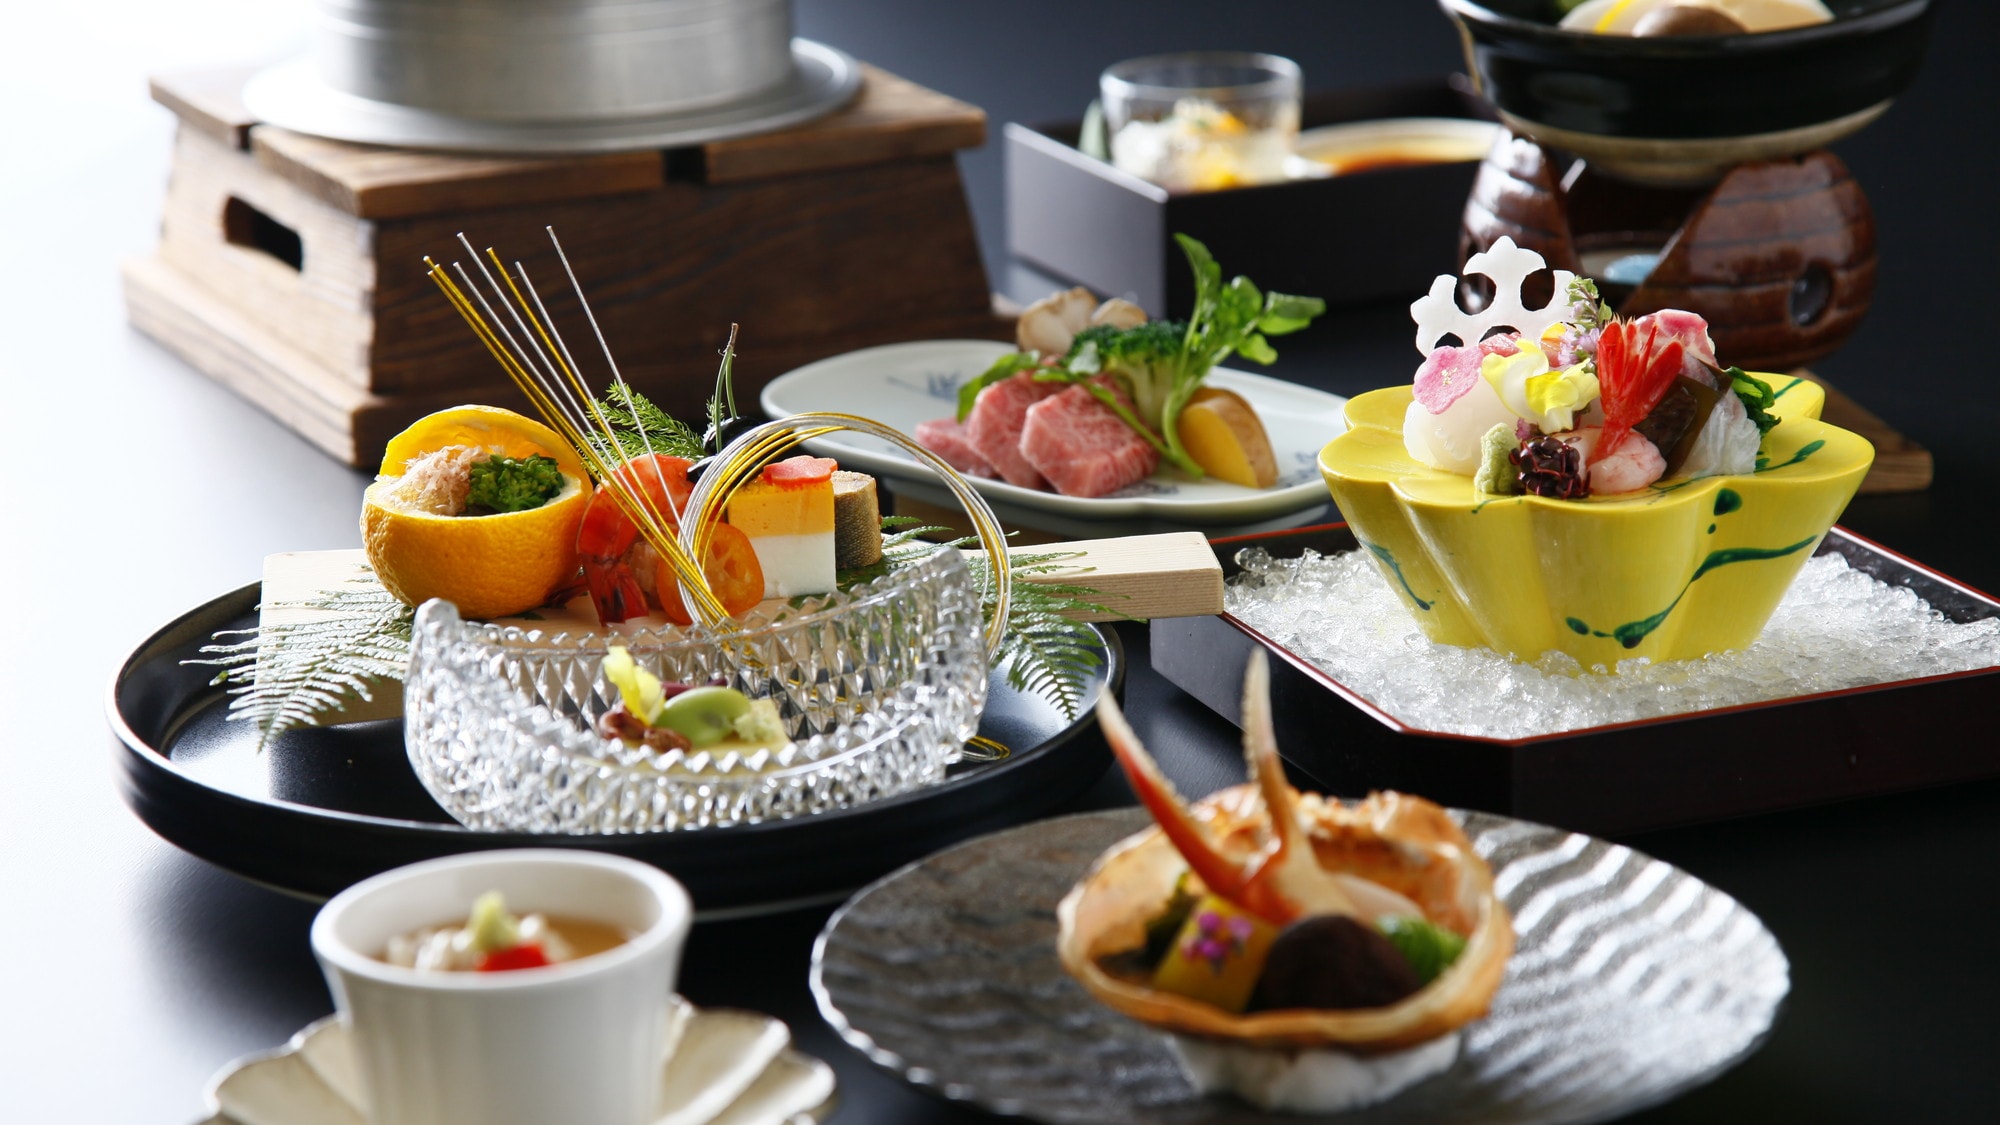 Please enjoy seasonal kaiseki cuisine that is fun with colorful eyes. ※image